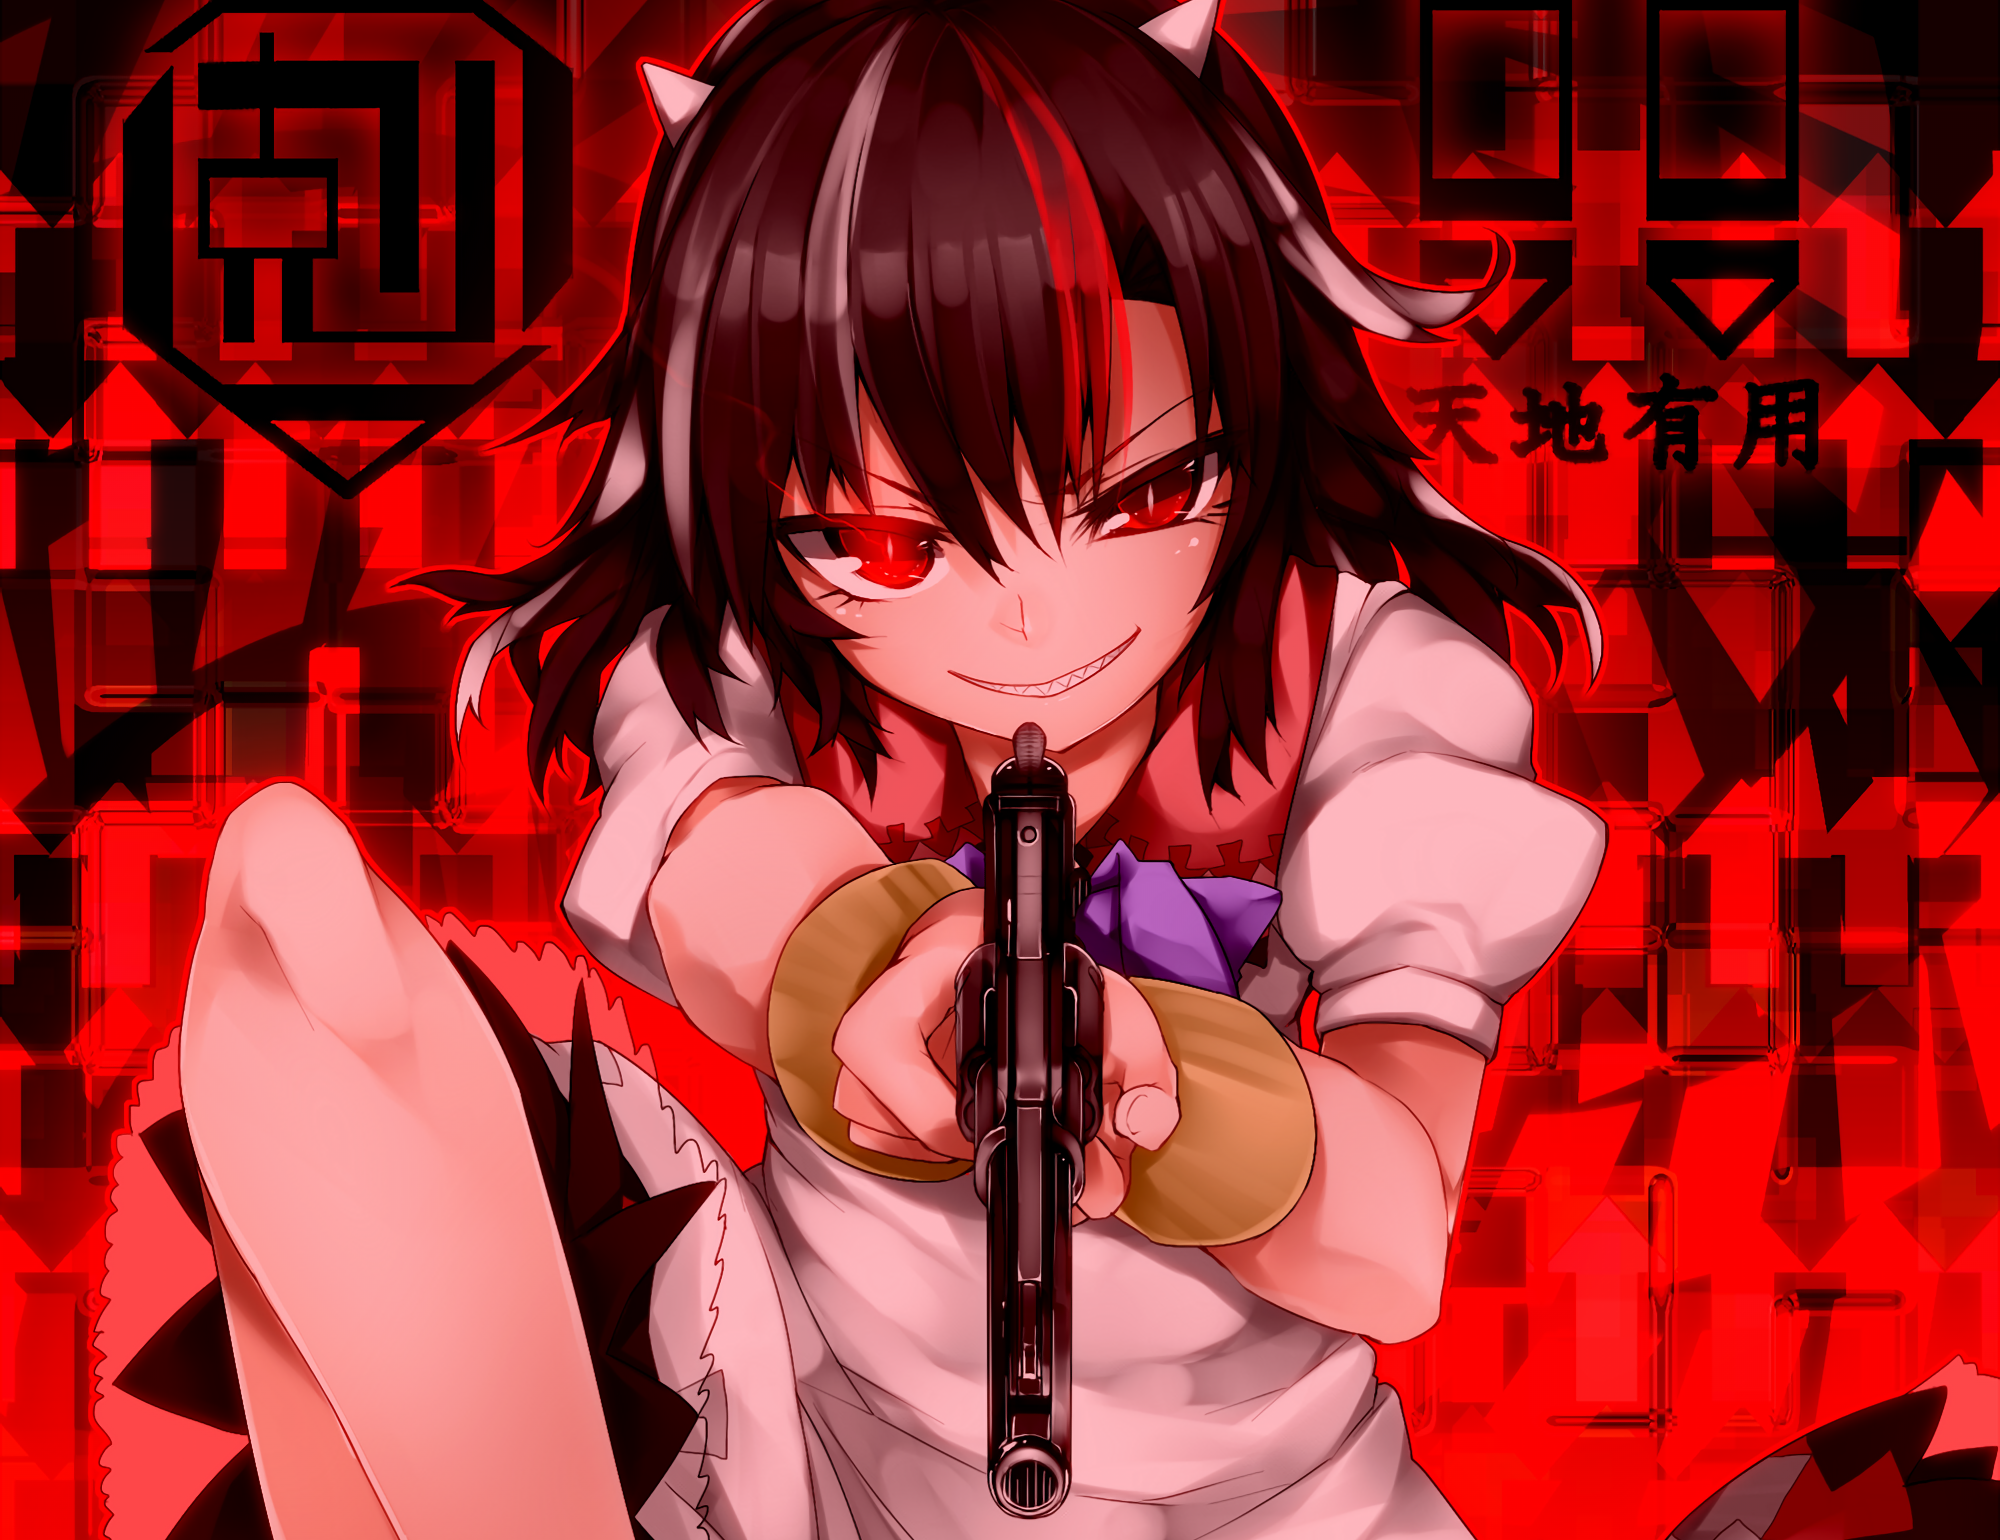 Kijin Seija Multi Colored Hair Red Eyes Gun Dress Weapon Horns Short Hair Anime 2000x1540